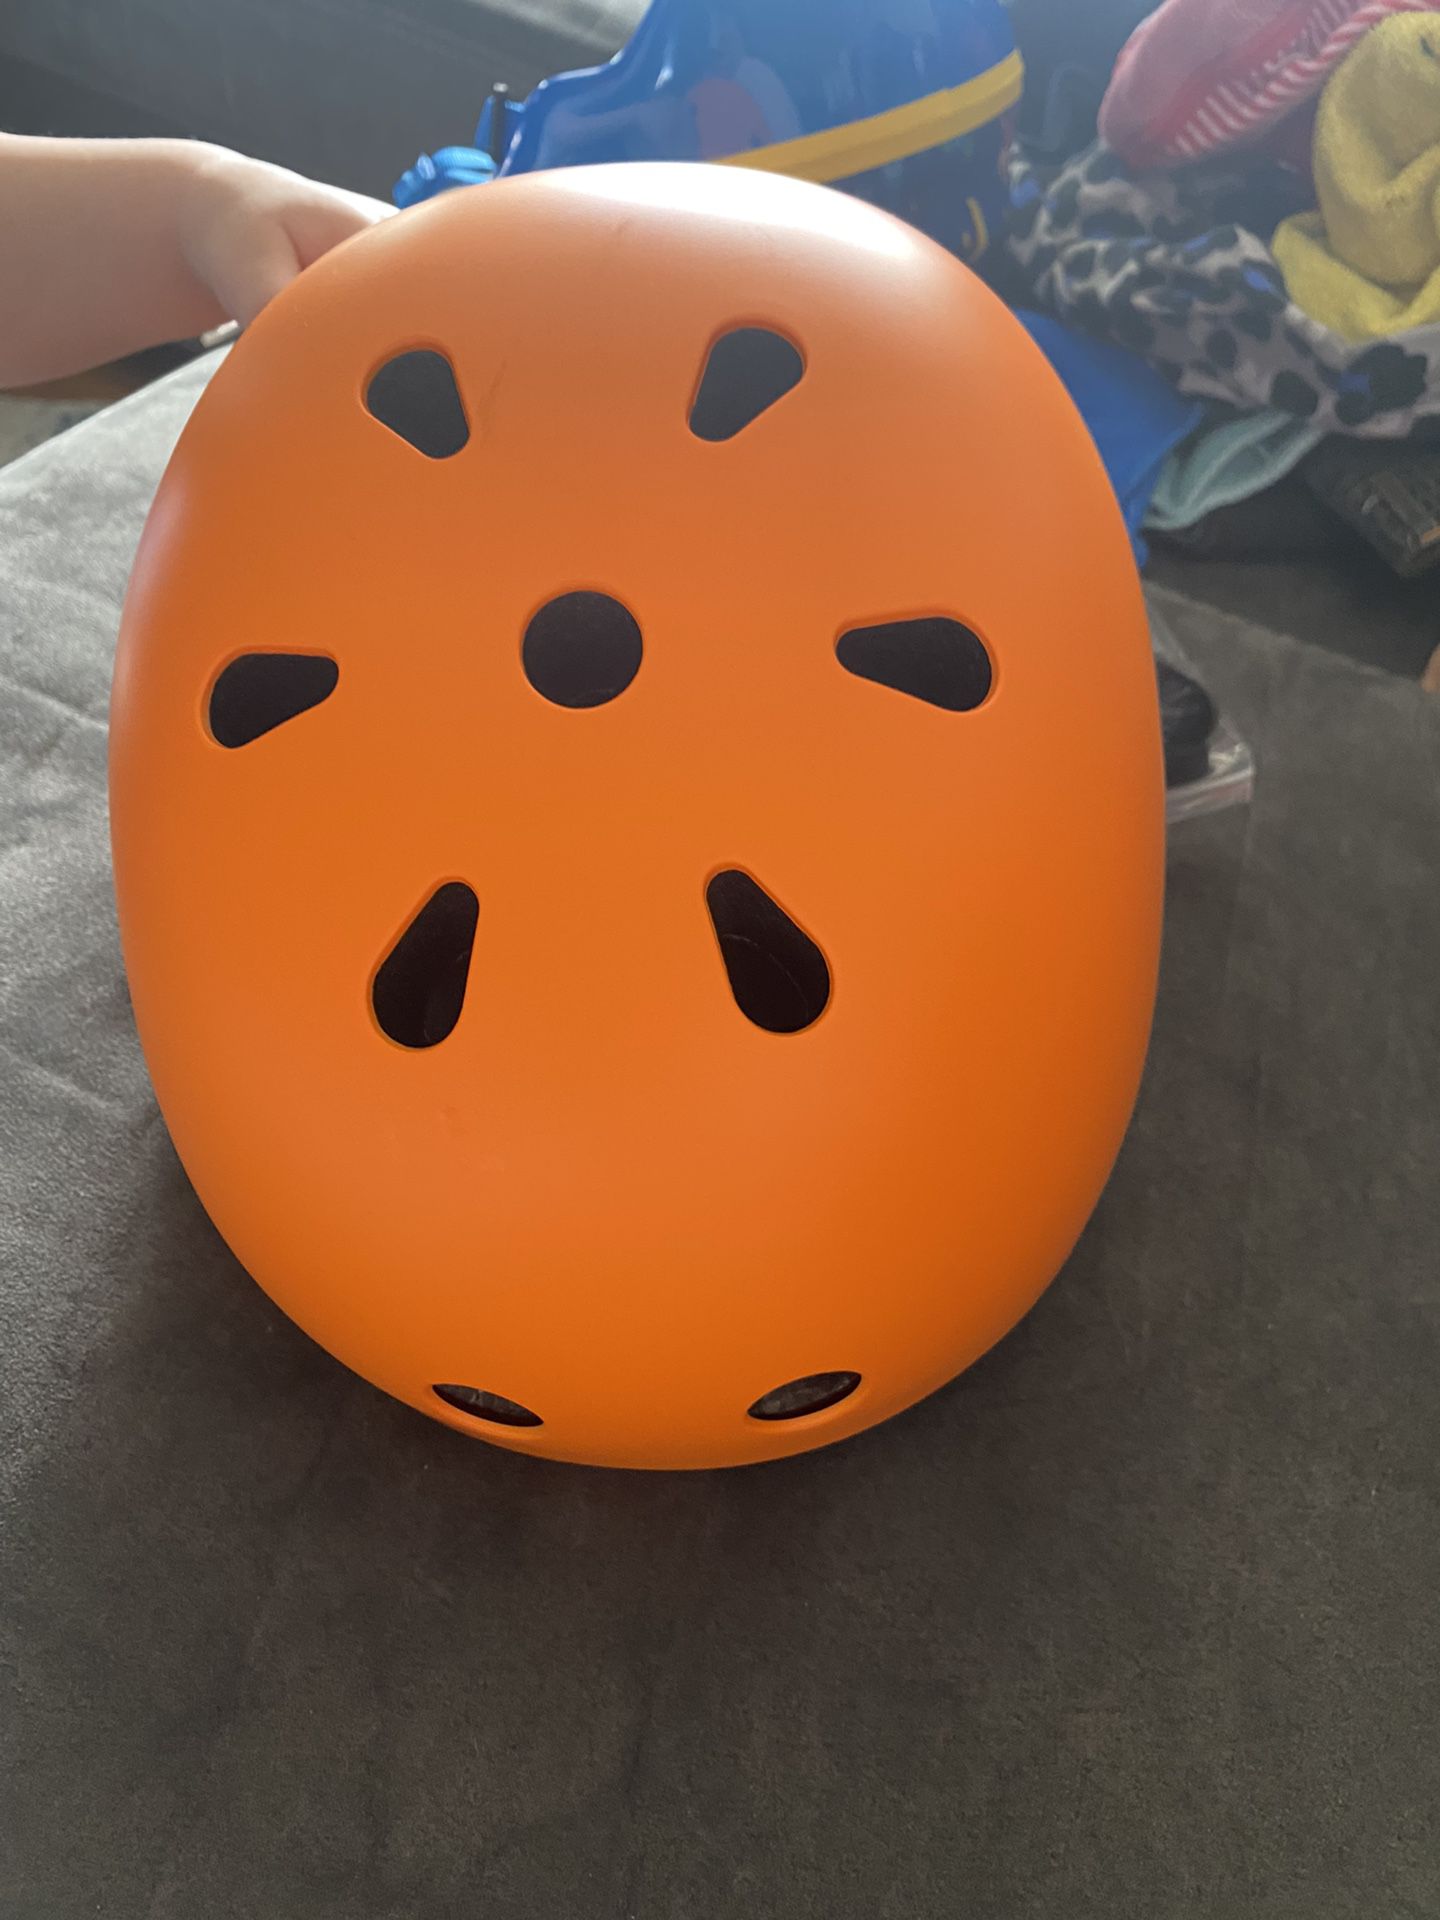 OUWOER Kids Orange Bike Helmet Toddler To Youth 